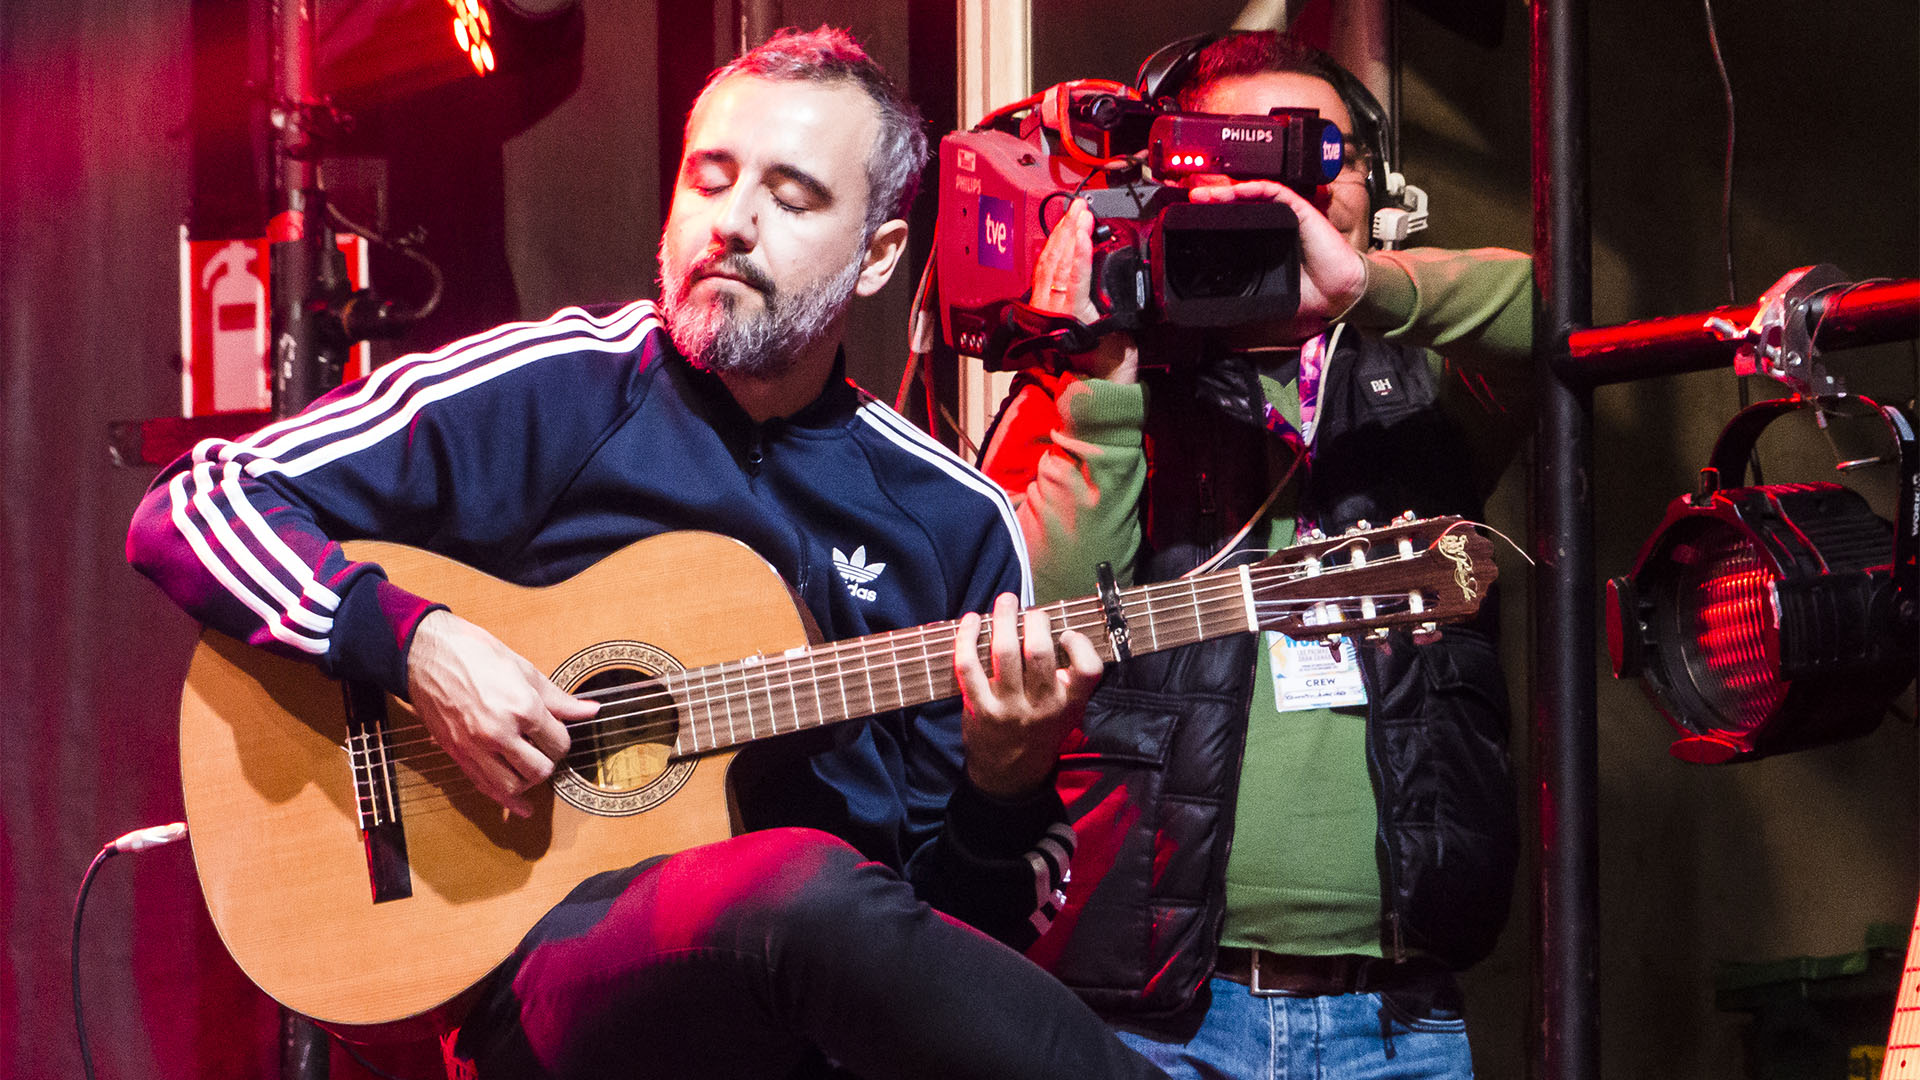 WOMAD Festival 2017 Las Palmas Gran Canaria. On stage: "Niño de Elche" (Francisco Contreras) – Flamenco aus Spanien als Cross over Projekt mit kritischen Texten.